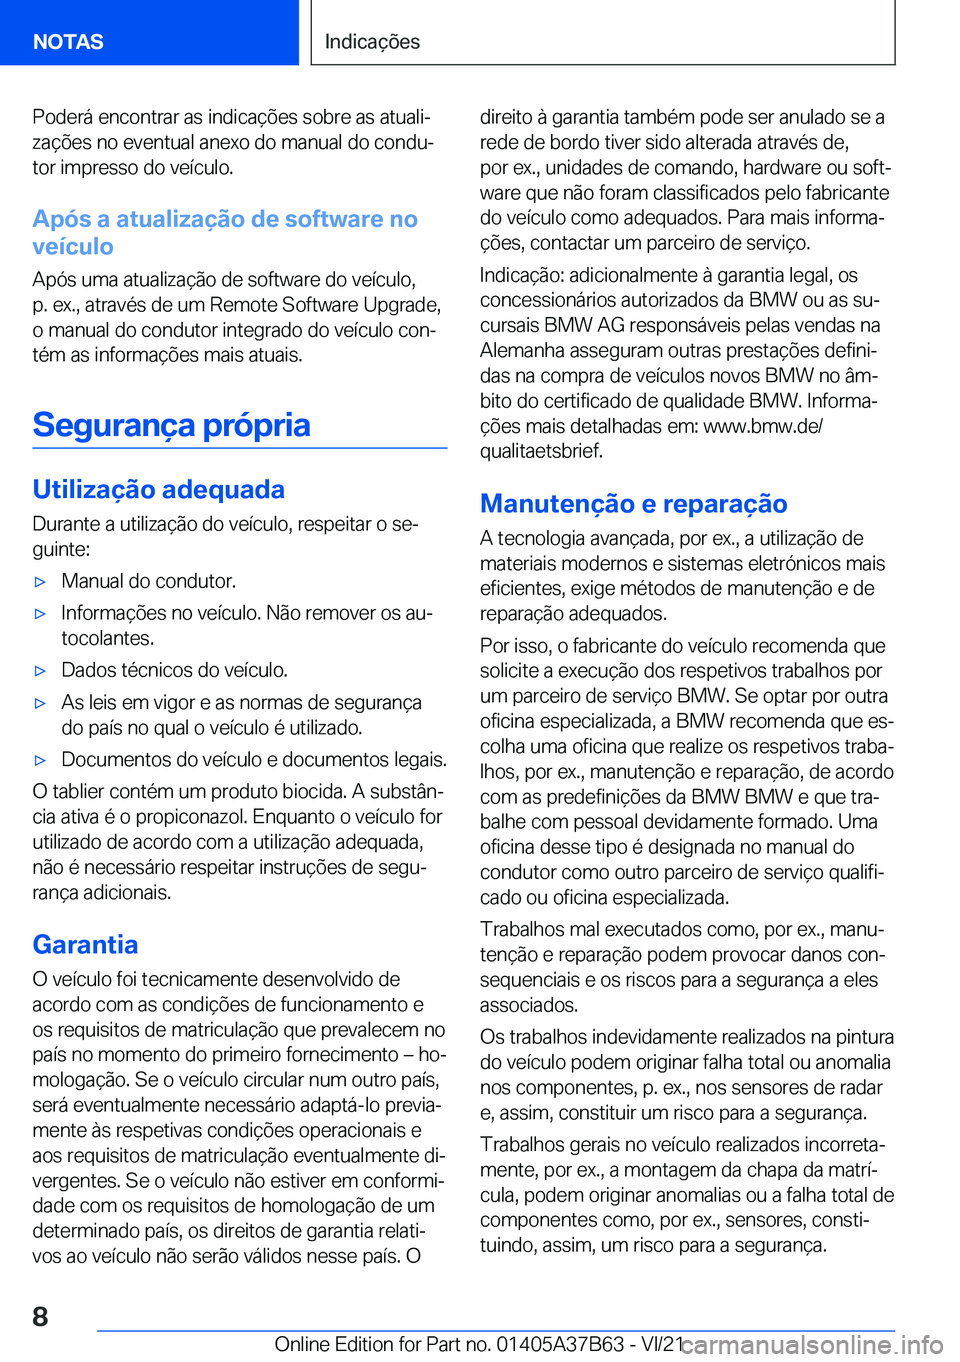 BMW M8 2022  Manual do condutor (in Portuguese) �P�o�d�e�r�á��e�n�c�o�n�t�r�a�r��a�s��i�n�d�i�c�a�